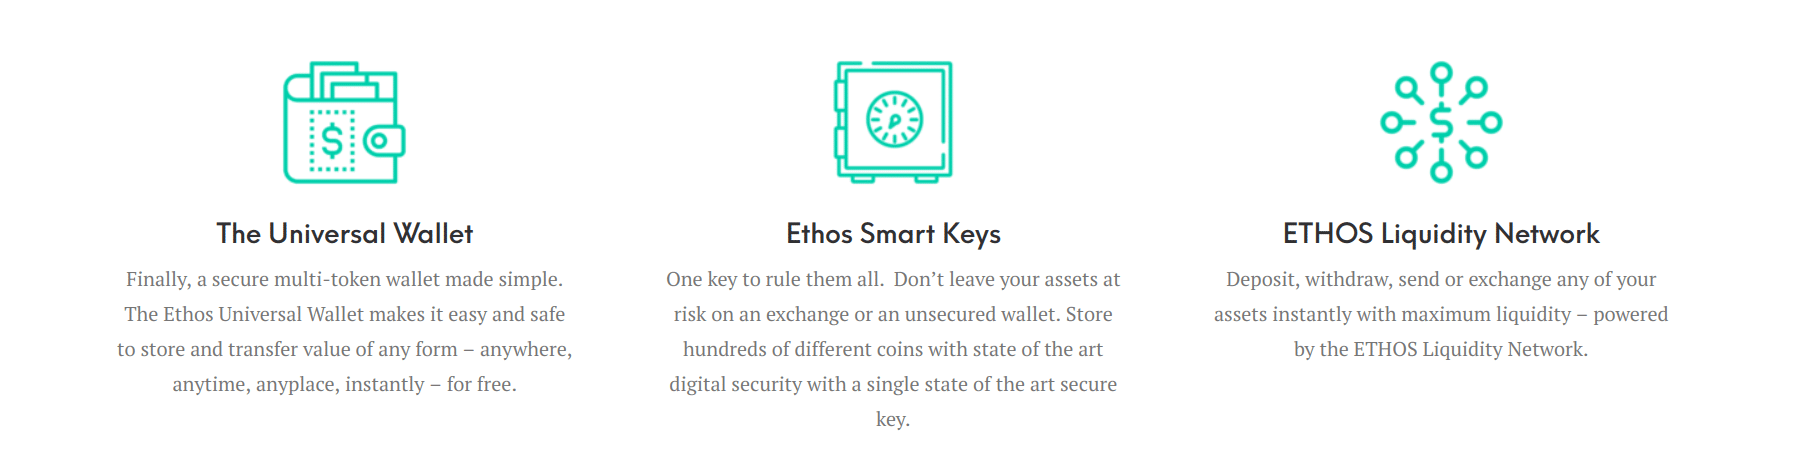 snap on ethos user manual